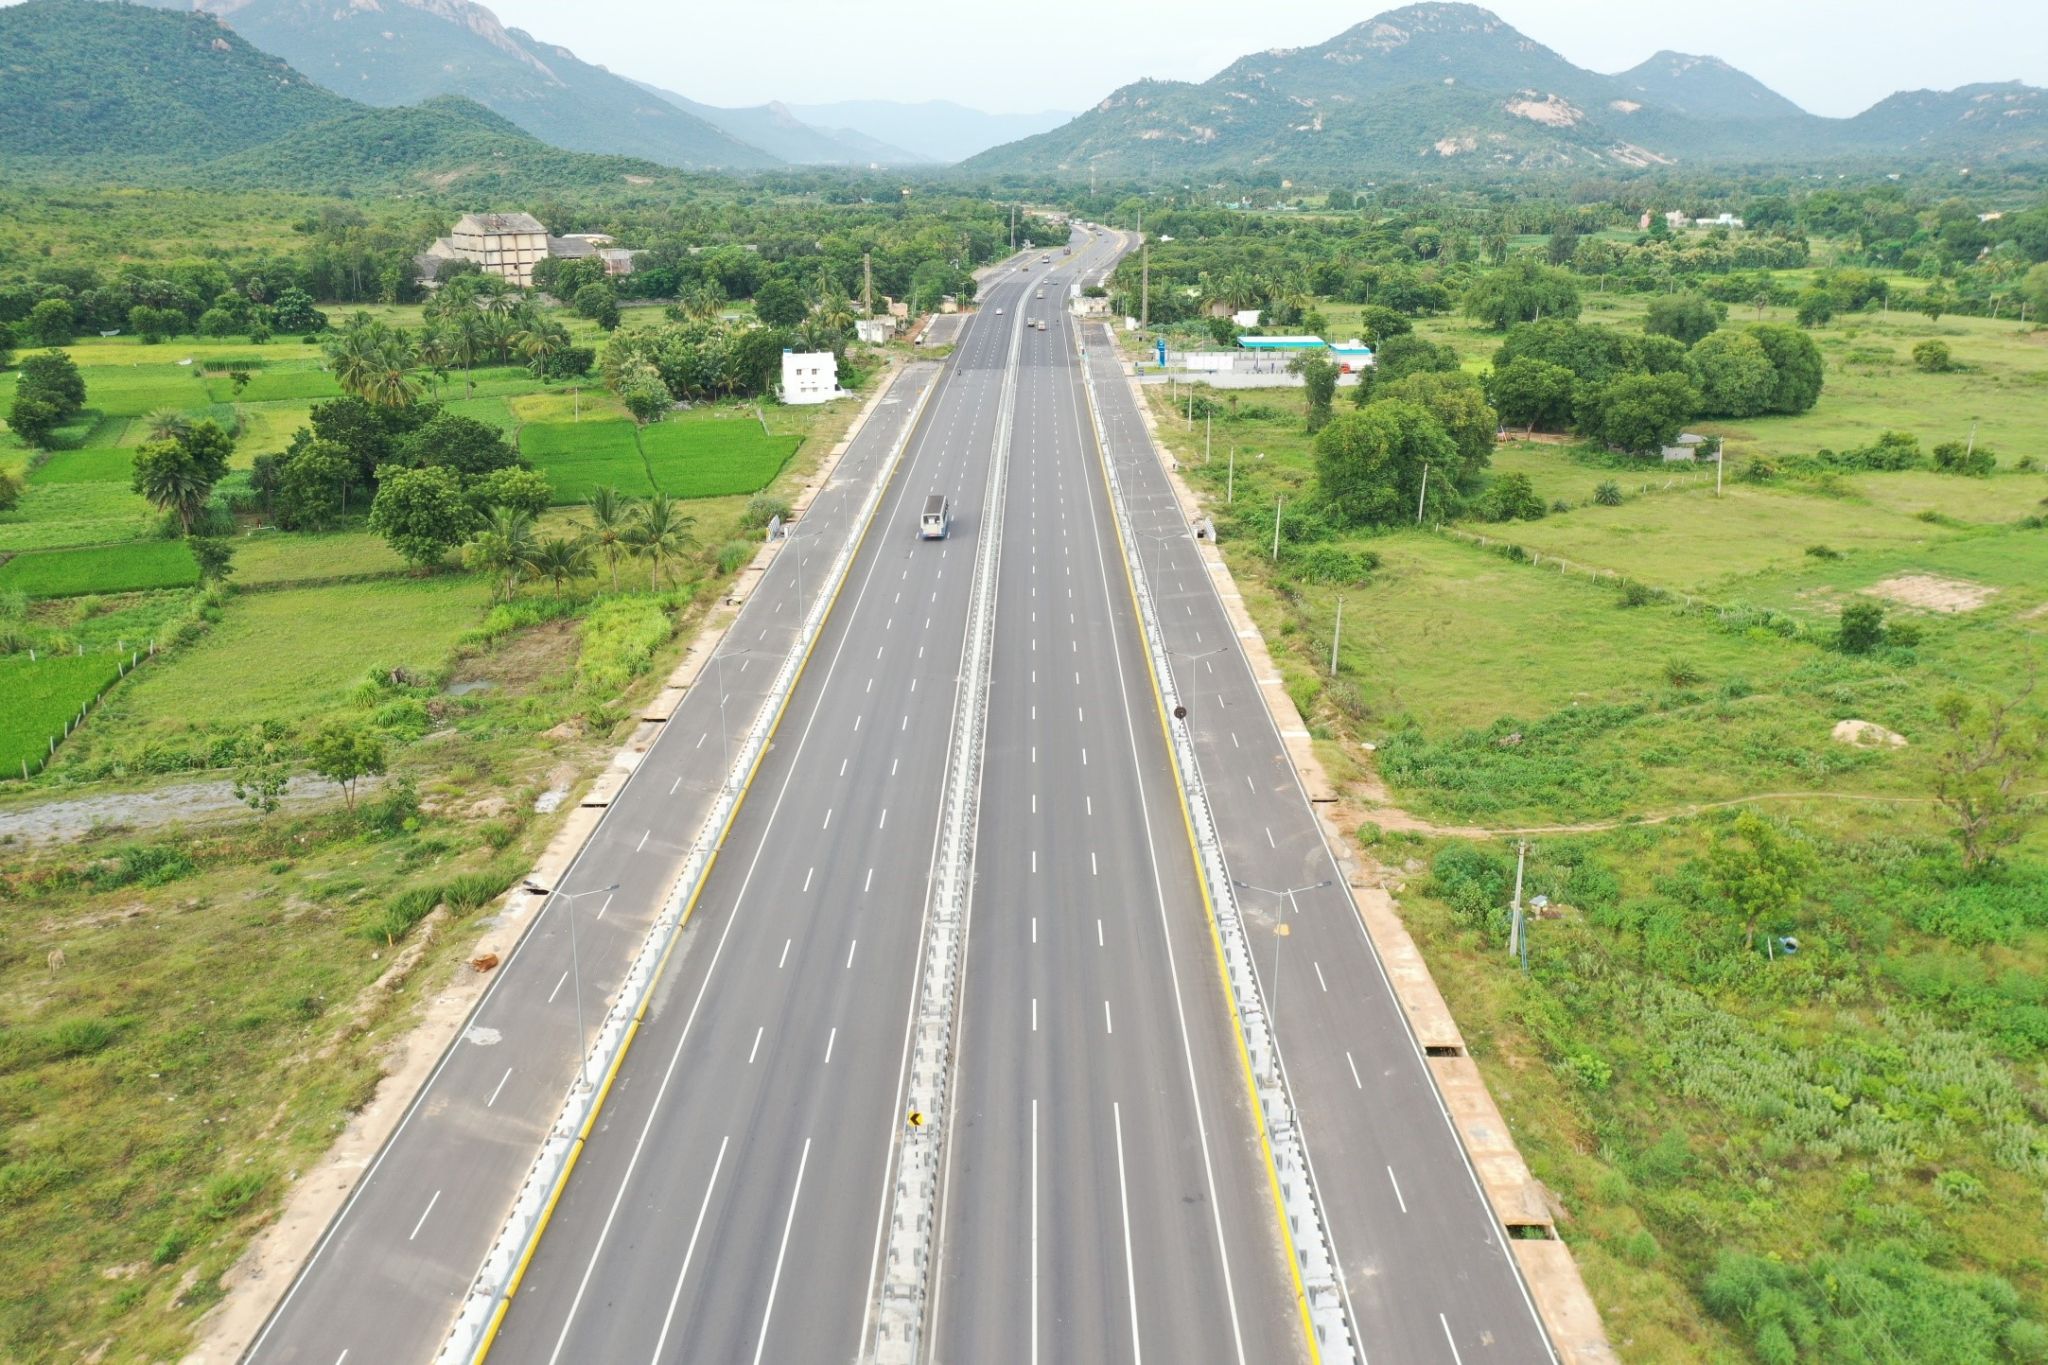 M/s KBM Construction got a new road project in Odisha